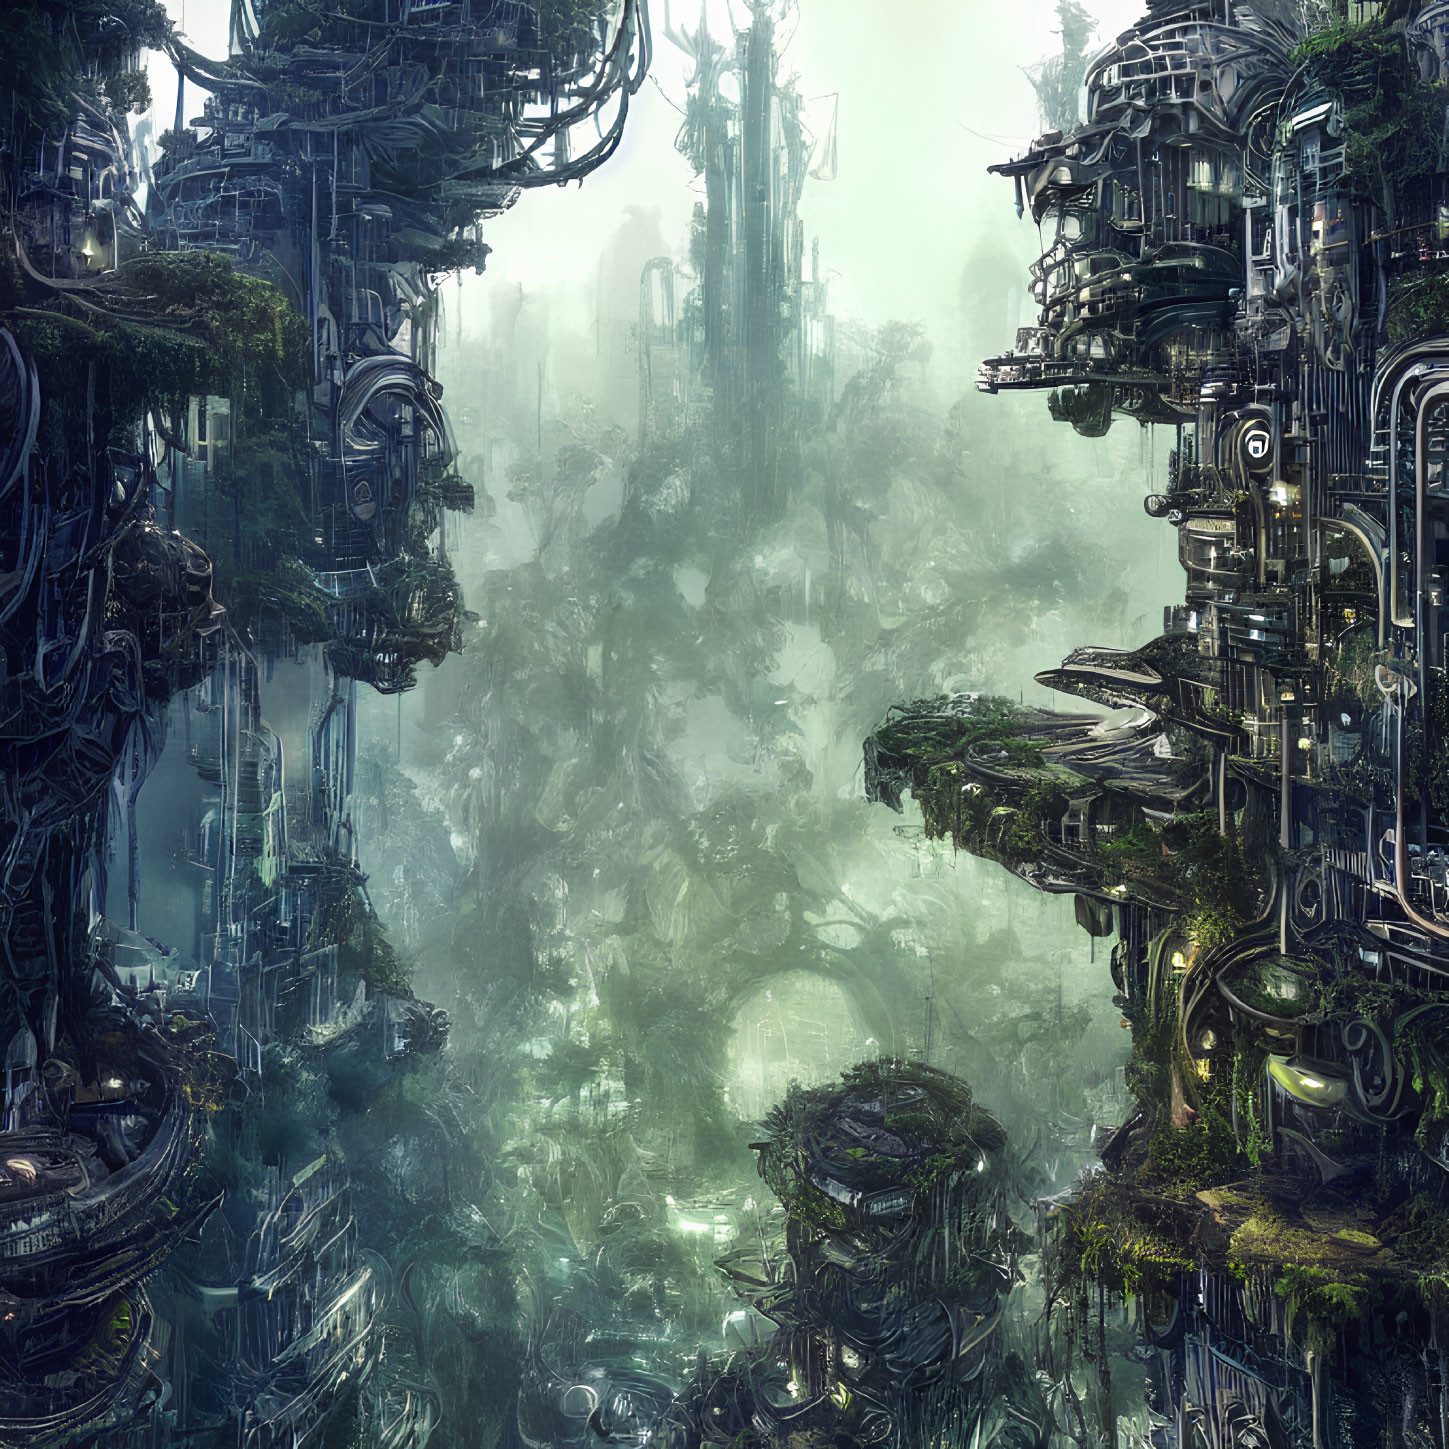 Futuristic cybernetic cityscape in misty, verdant setting